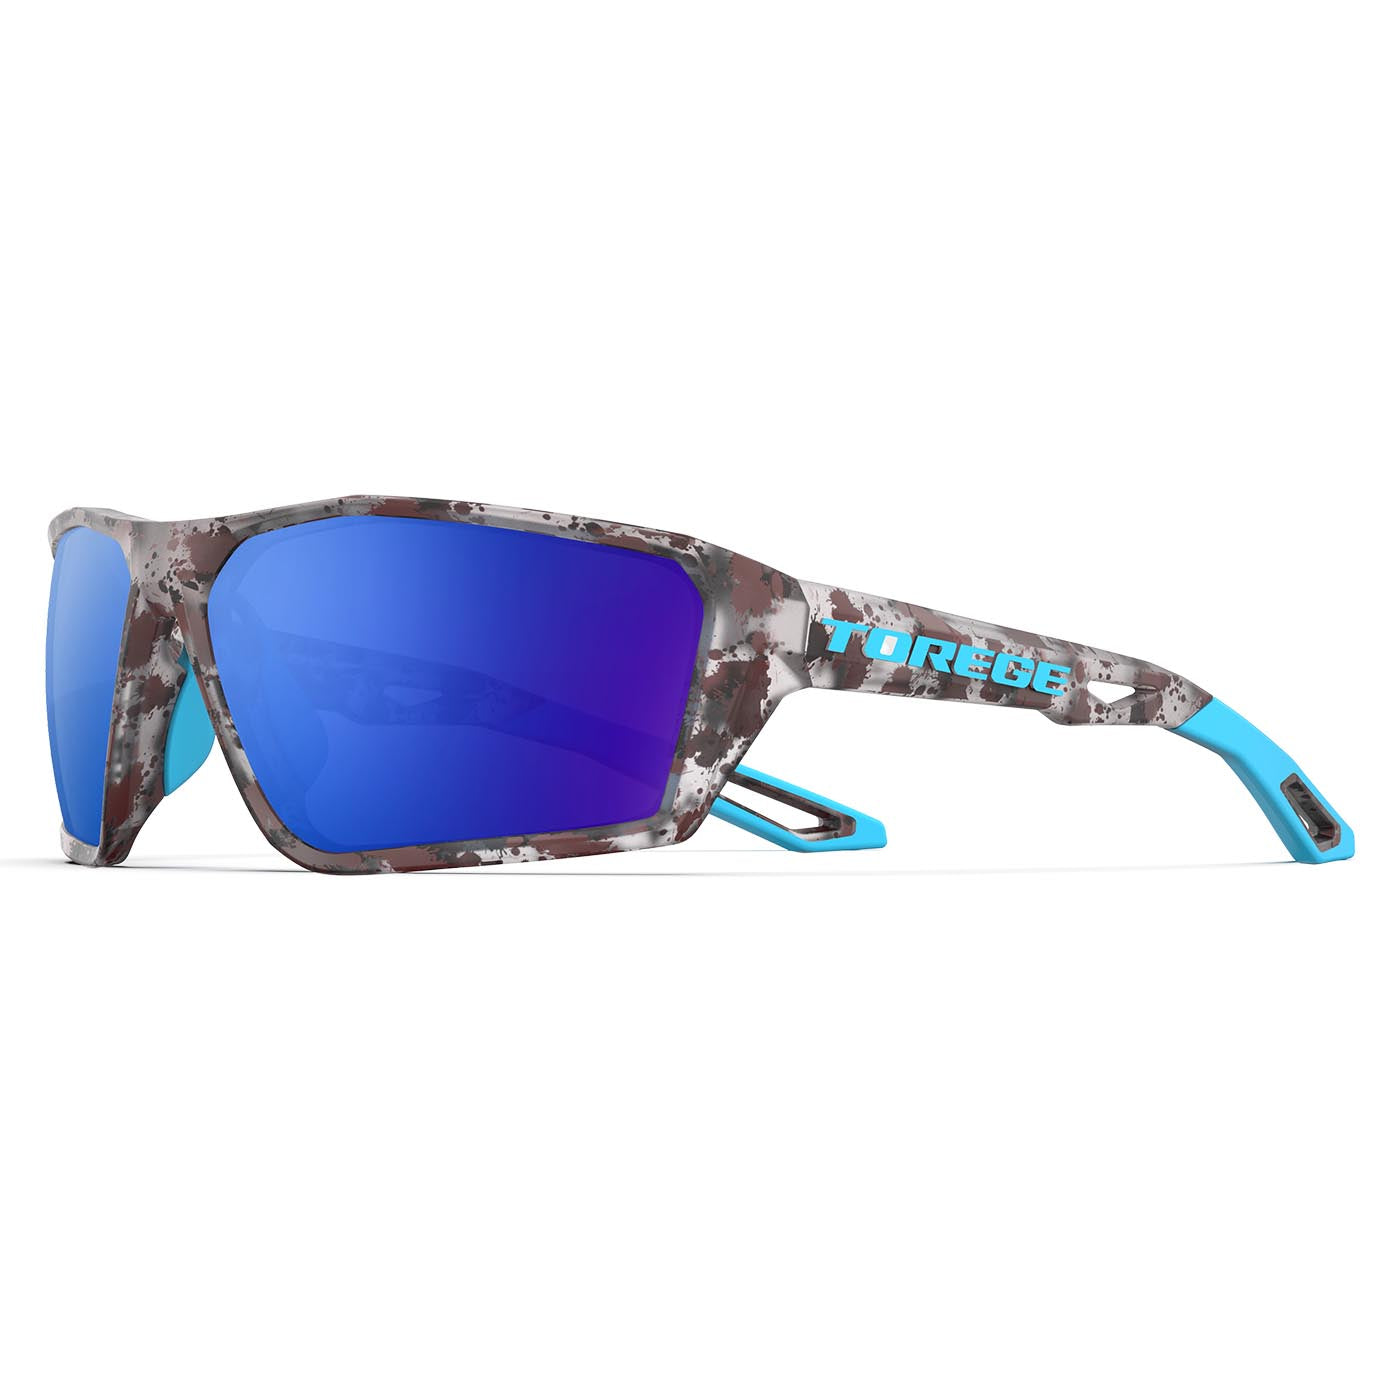 Torege 'Gray Lizard' Sports Polarized Sunglasses for Men & Women - Lifetime Warranty - Versatile Glasses for Cycling, Running, Driving, Fishing